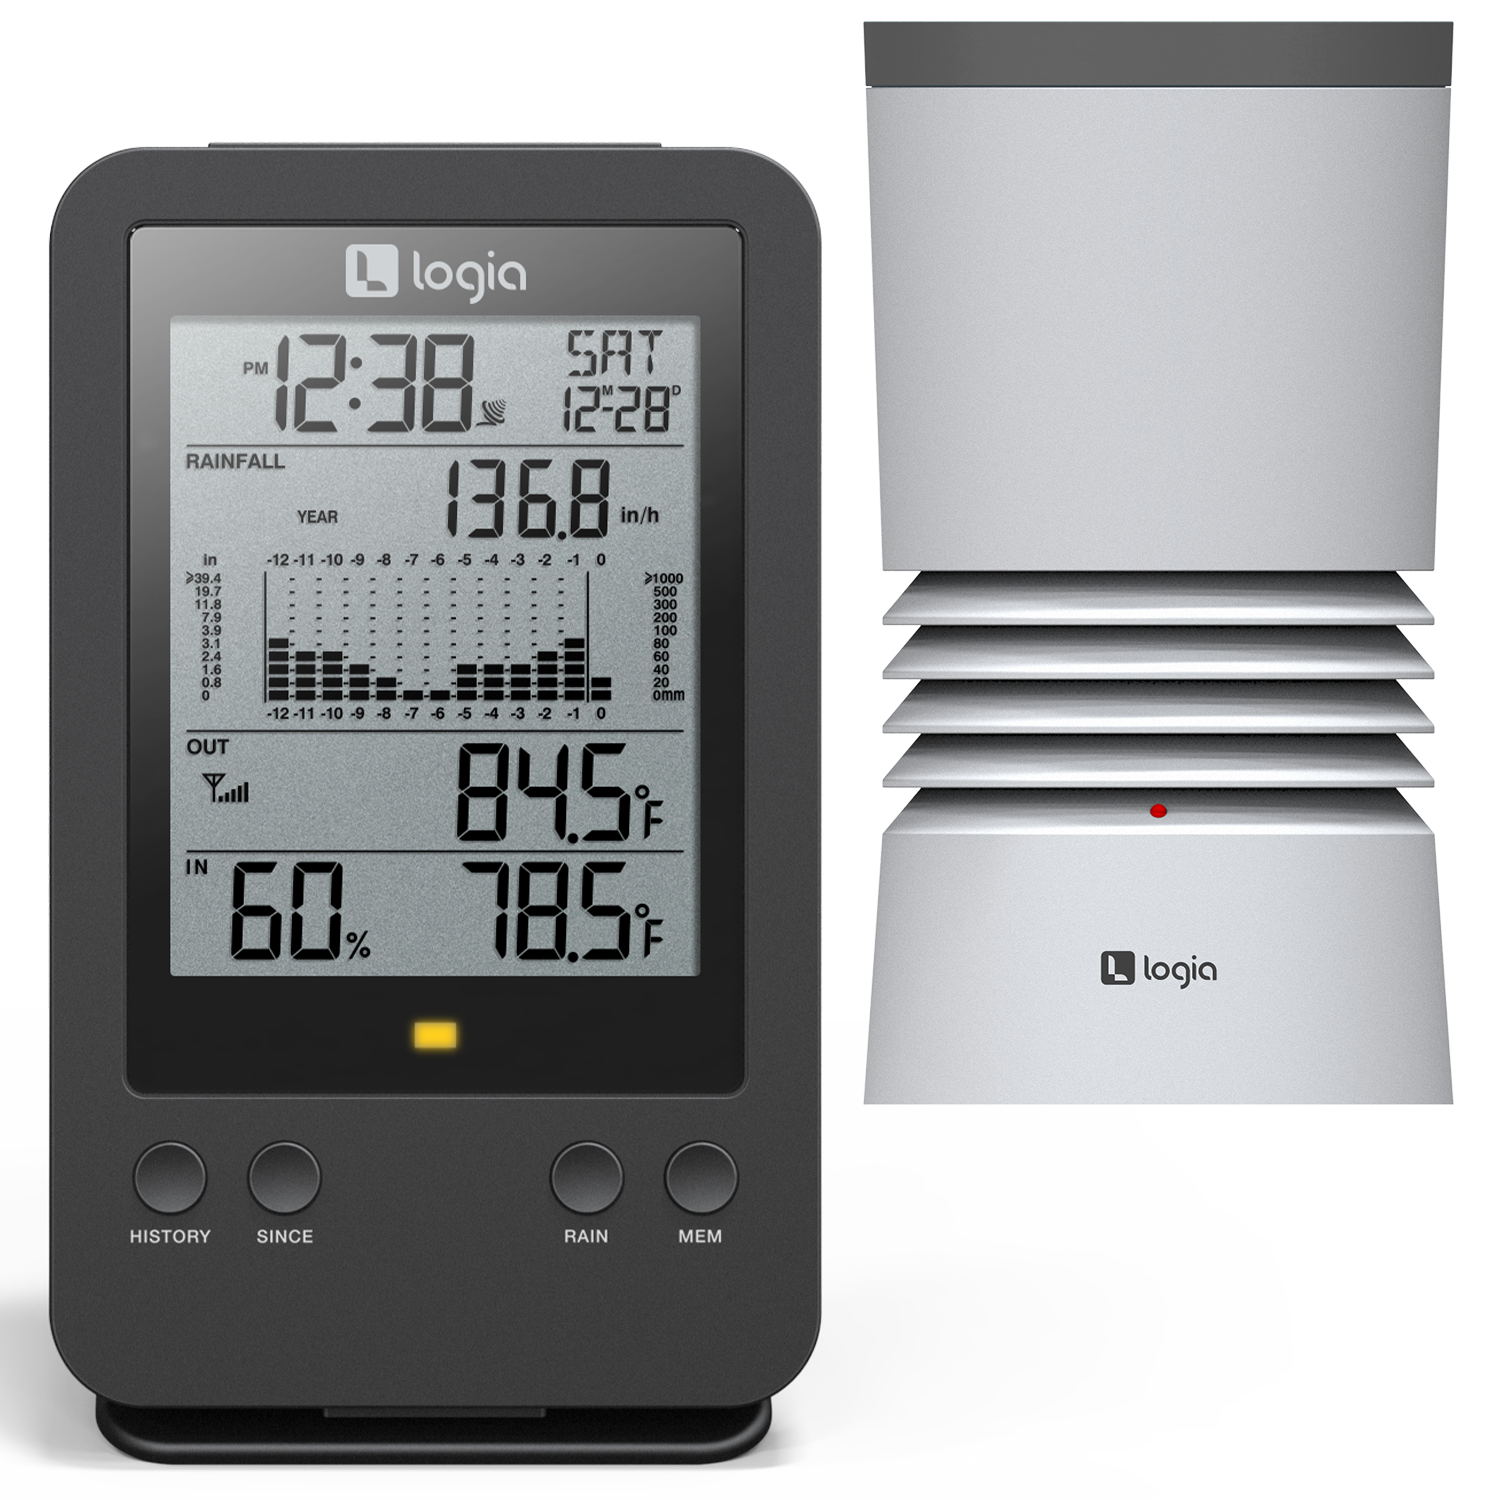 Bresser  Oregon Scientific Weather@Home Wireless Thermometer